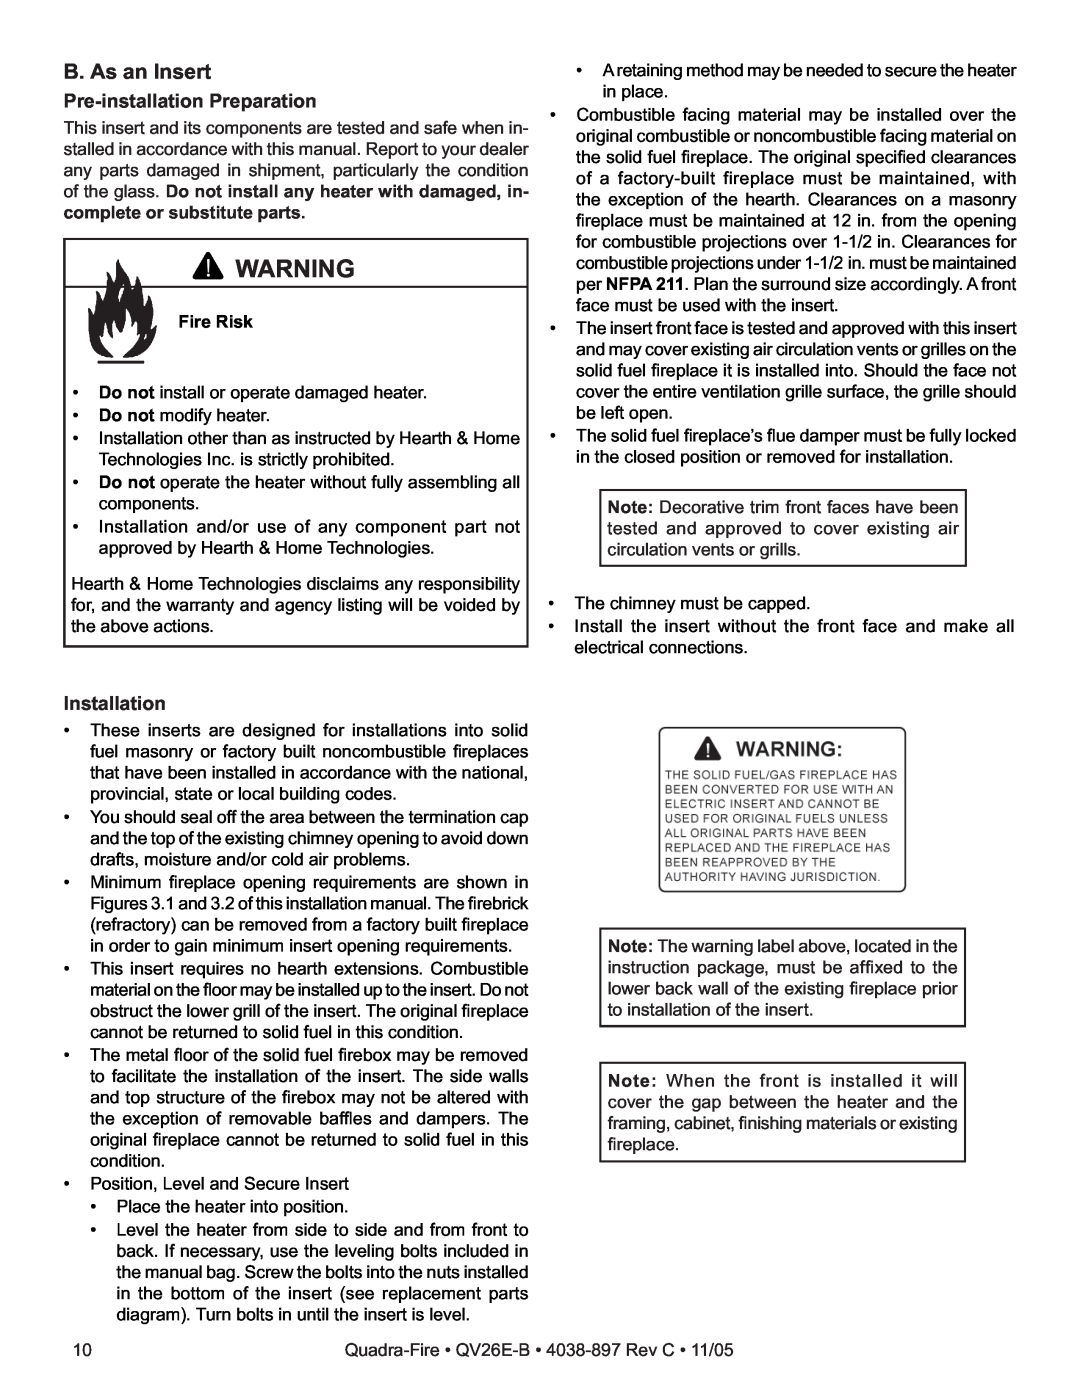 Quadra-Fire QV26E-B owner manual B. As an Insert, Pre-installationPreparation, Installation, Fire Risk 